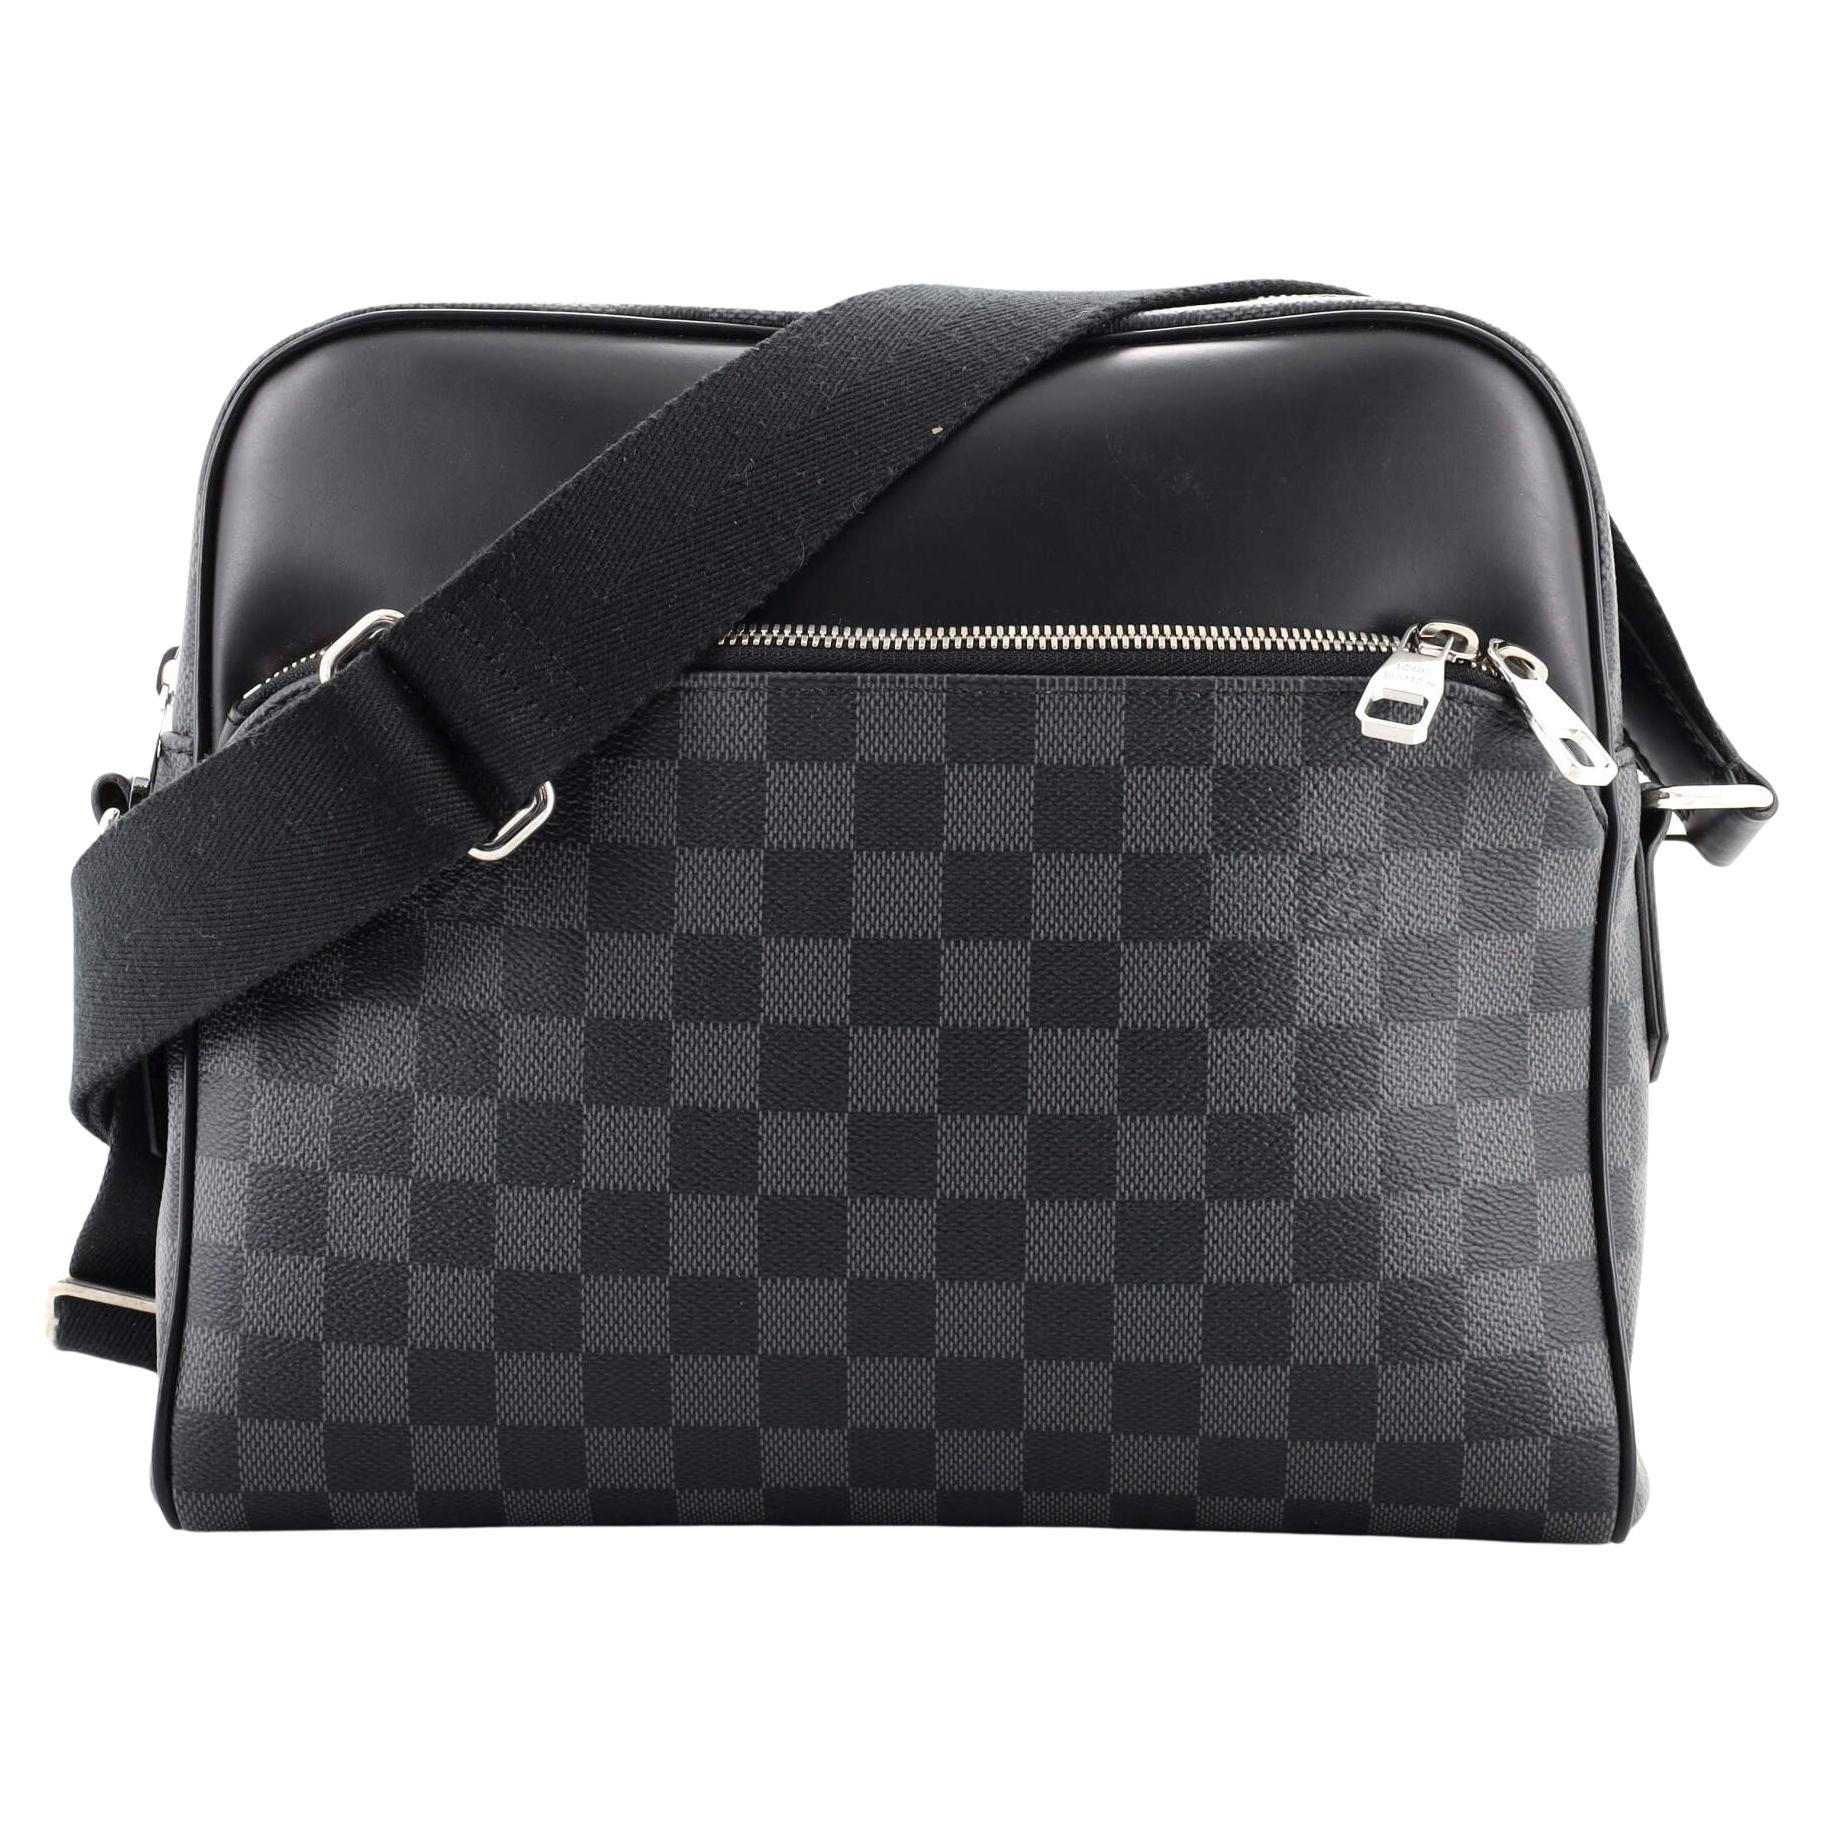 Louis Vuitton Black And Gold Handbag - 334 For Sale on 1stDibs